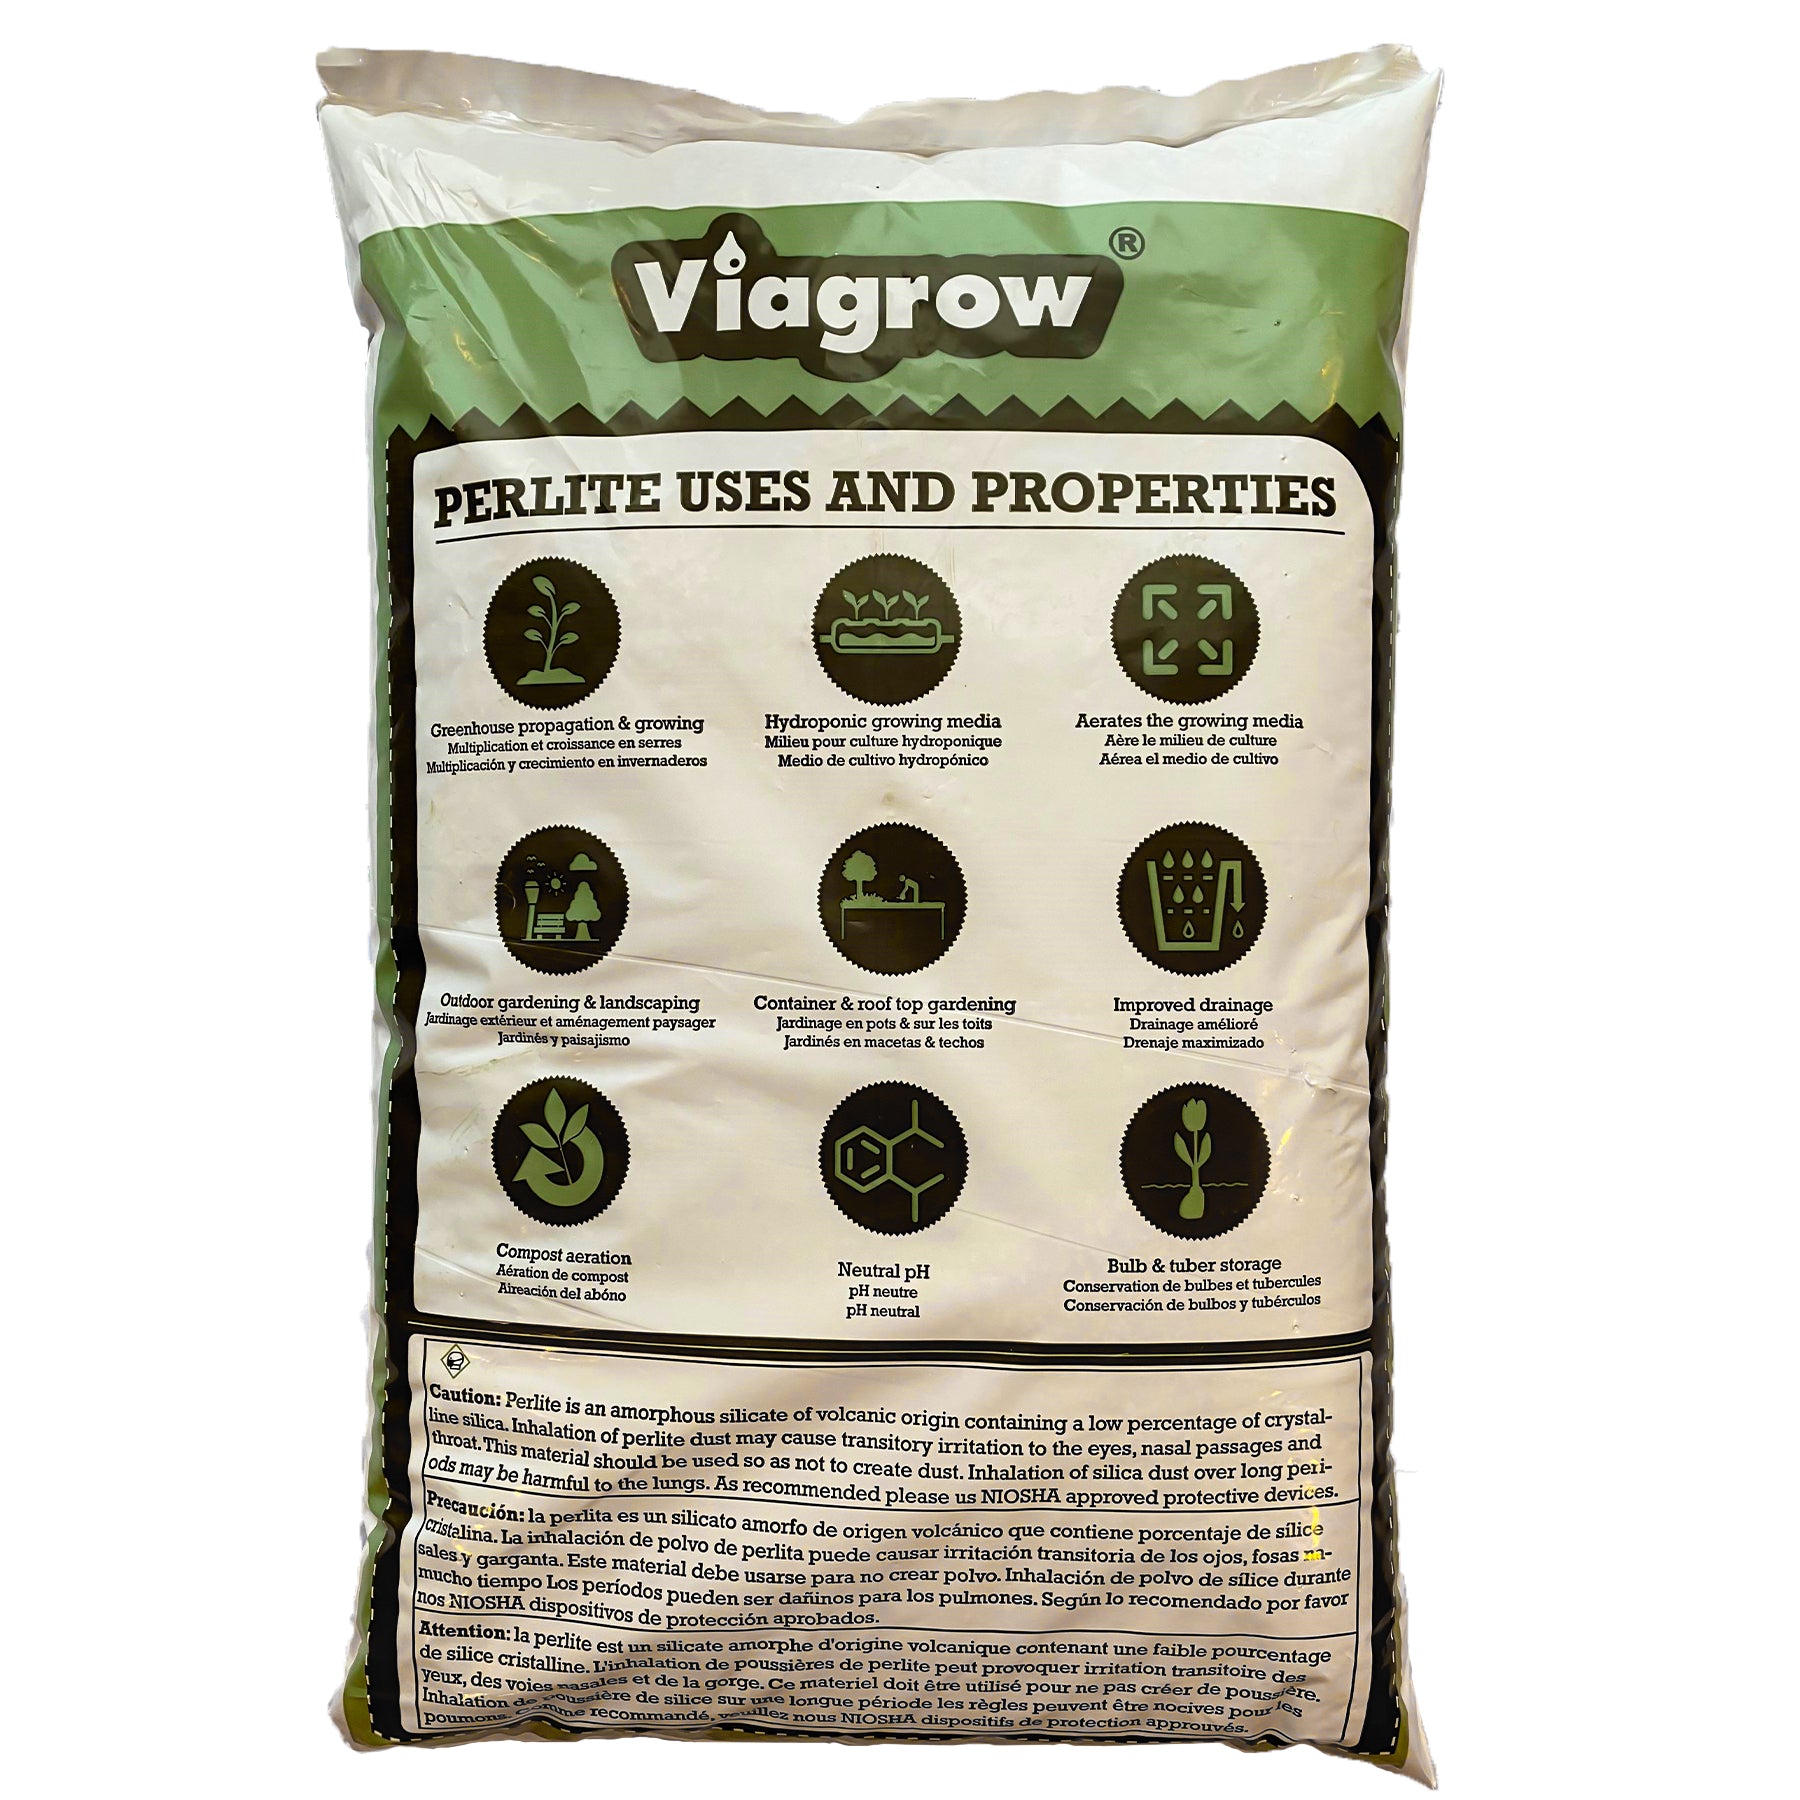 Viagrow Horticultural Perlite, 1 Cubic Foot or 4 Cubic Foot